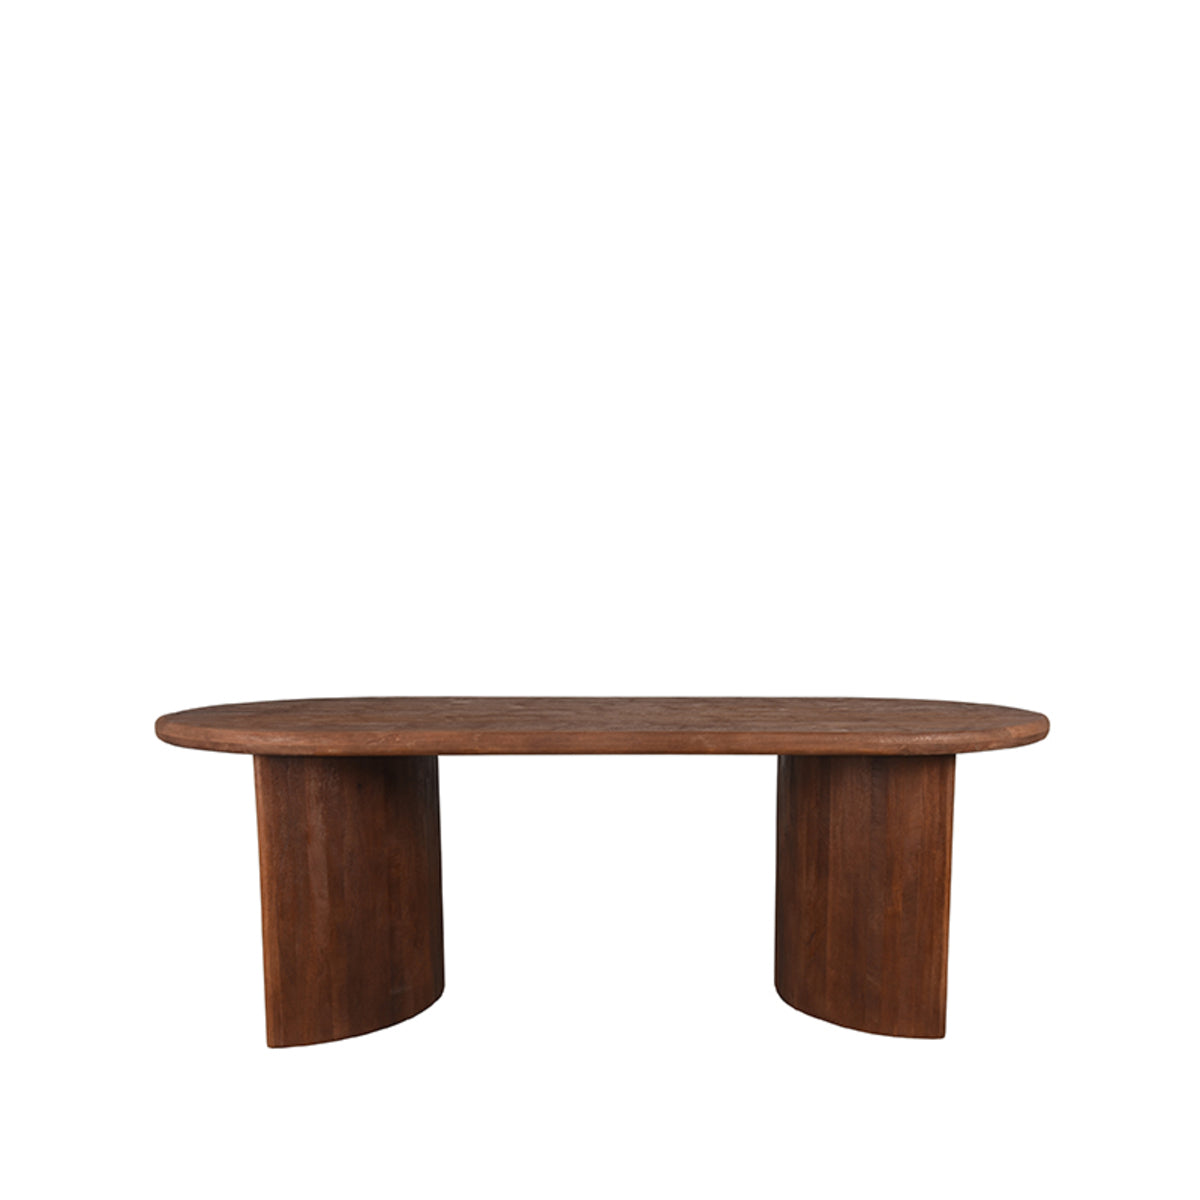 LABEL51 Dining room table Vito - Espresso - Mango wood - 240 cm